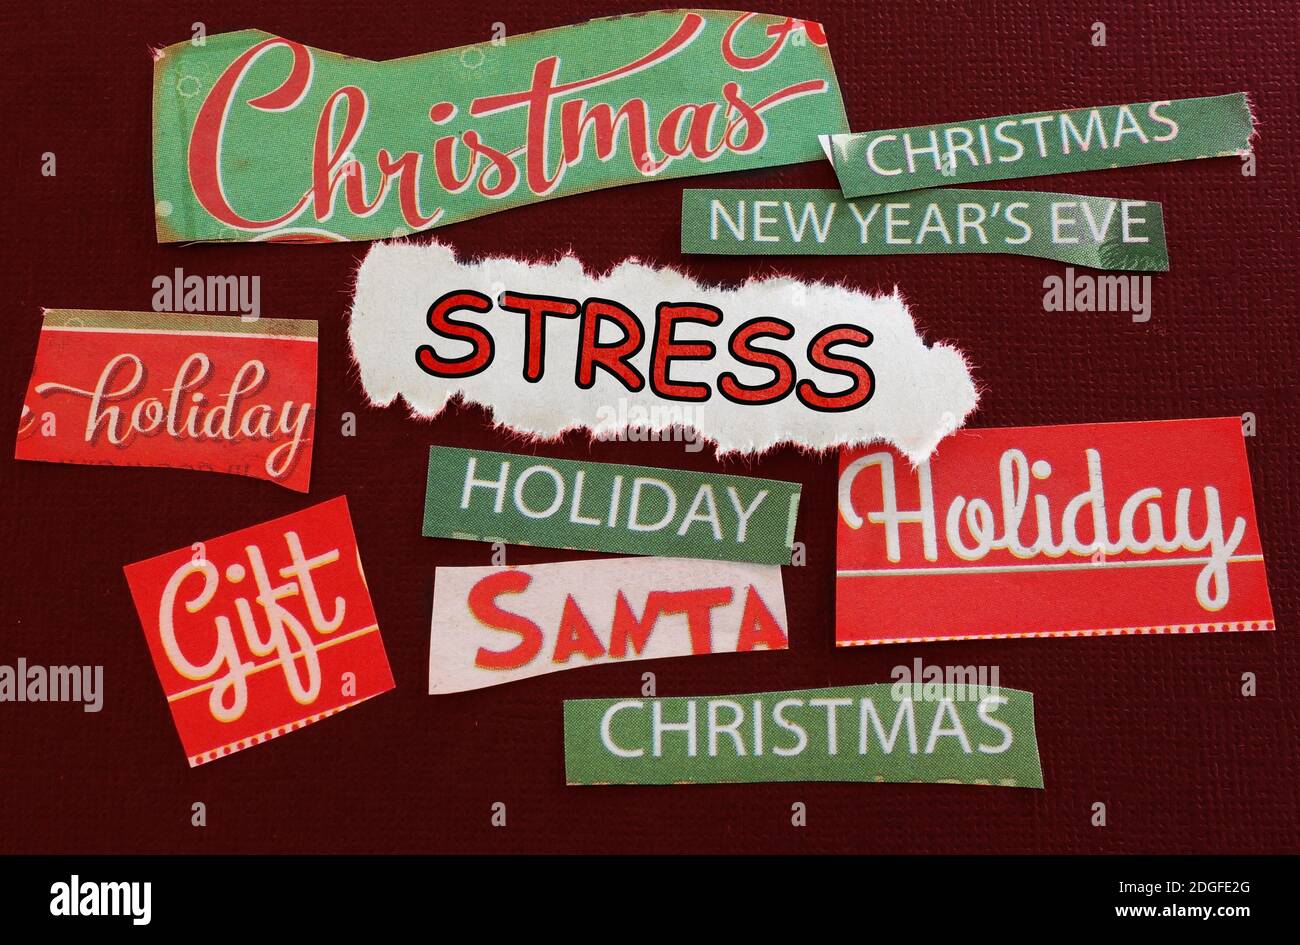 Christmas and Holidays Stress Stock Photo